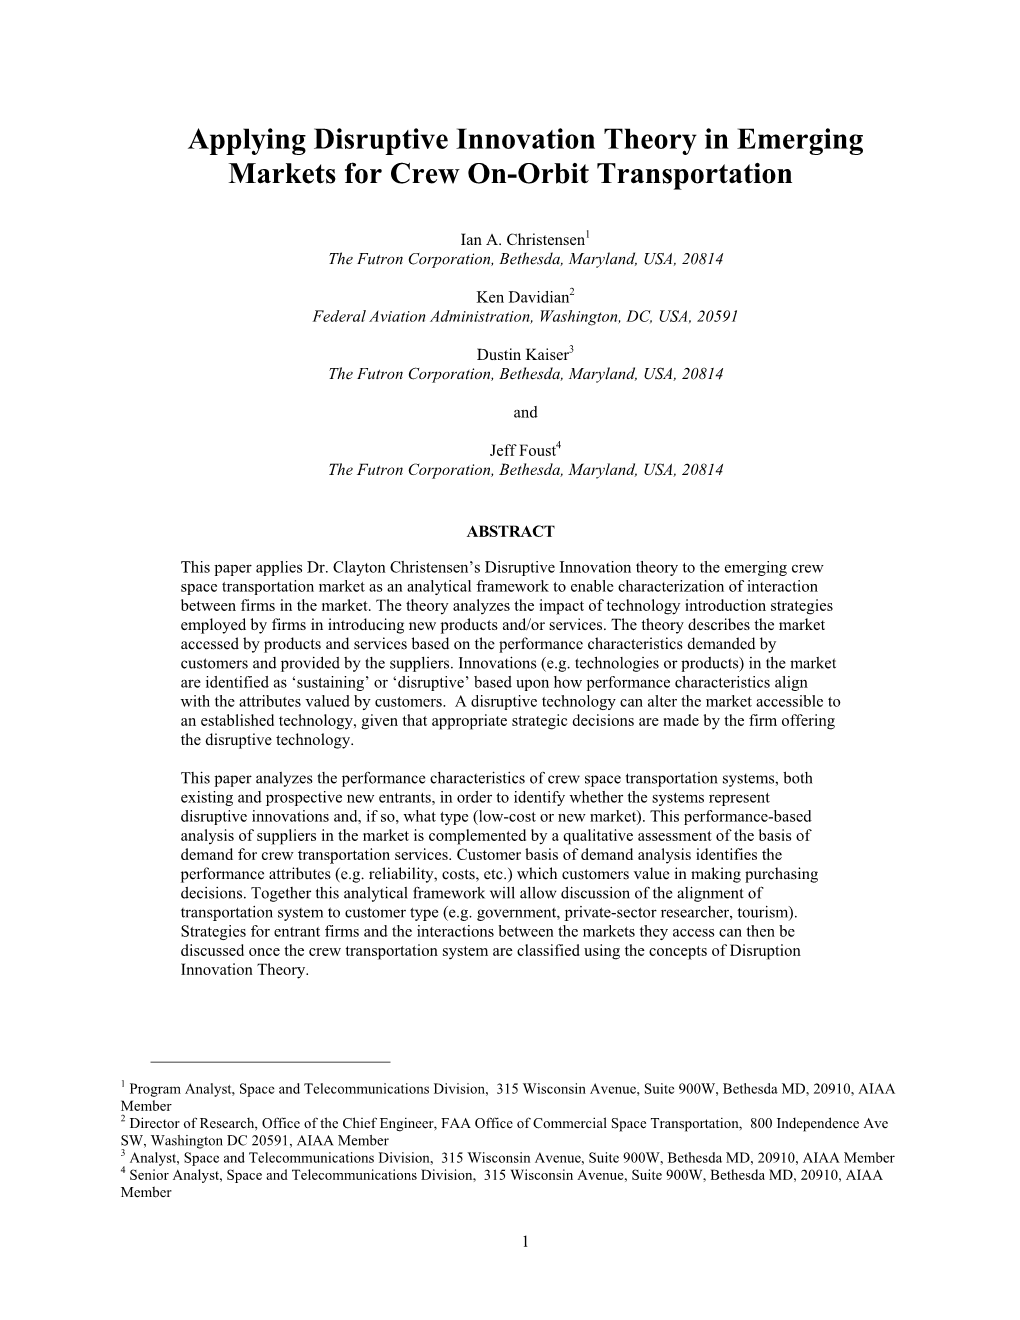 Applying Disruptive Innovation Theory in Emerging Markets for Crew On-Orbit Transportation